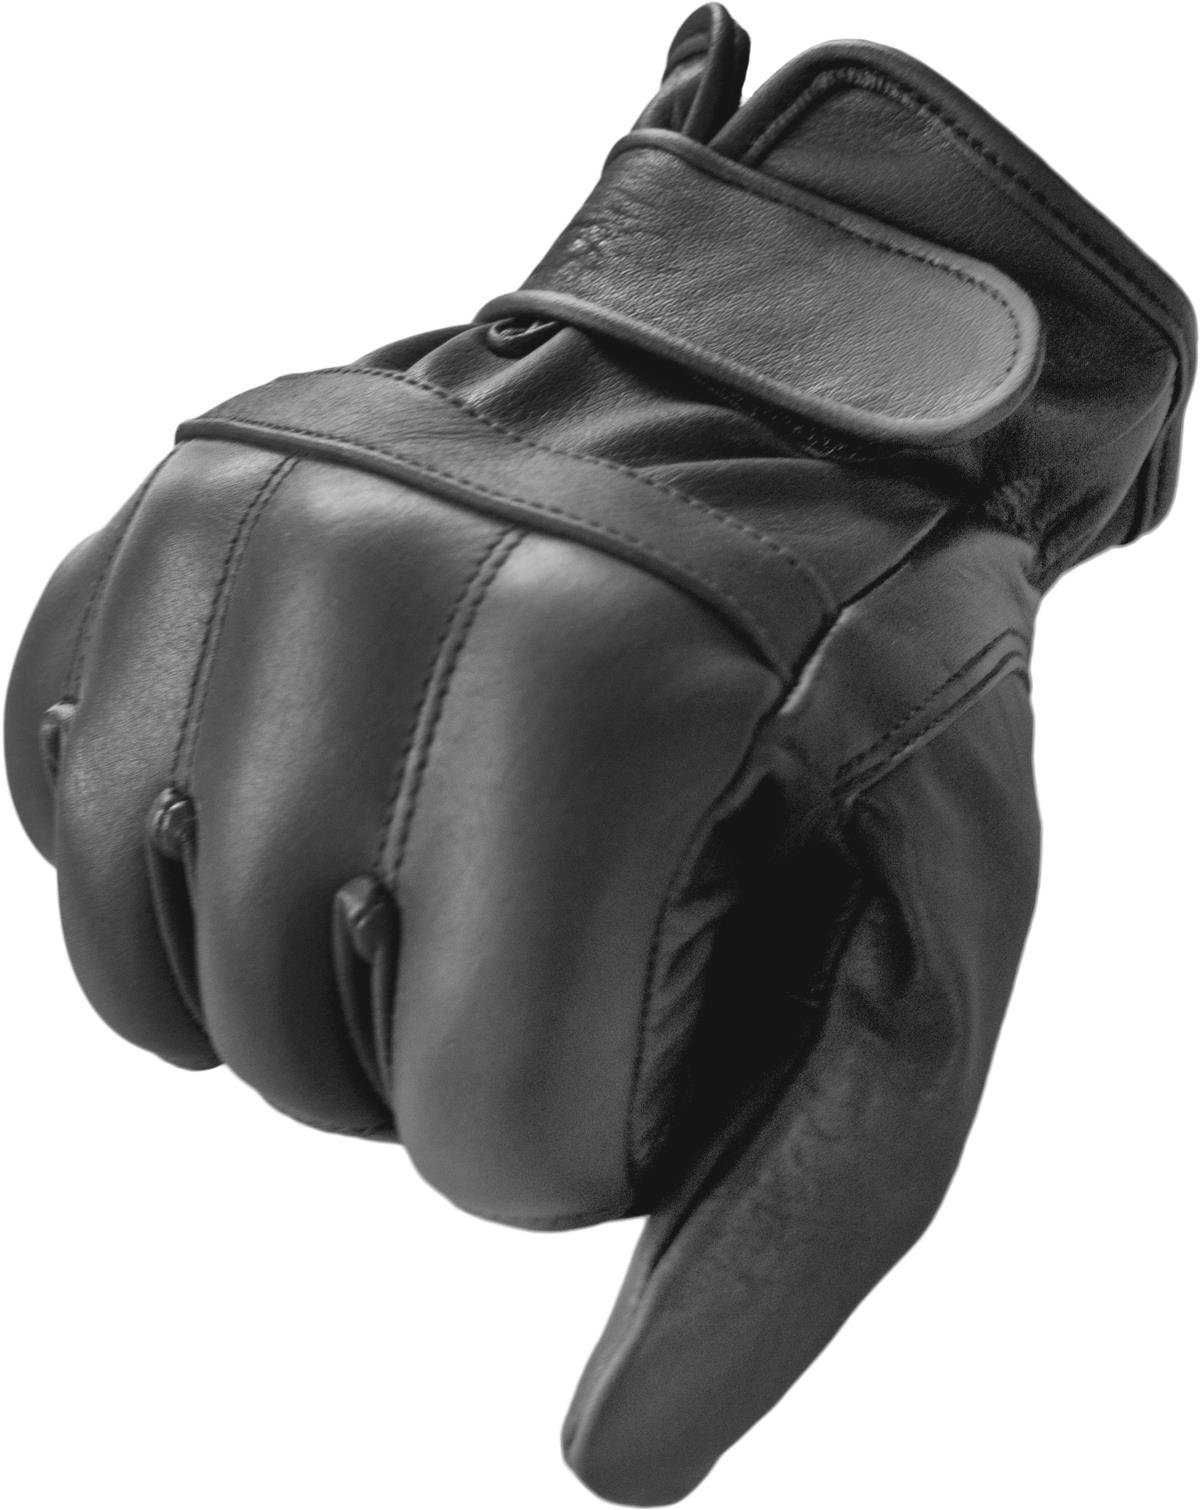 Mil-Tec Handschuhe Defender Sand Schwarz Security Lederhandschuhe S-XXL 